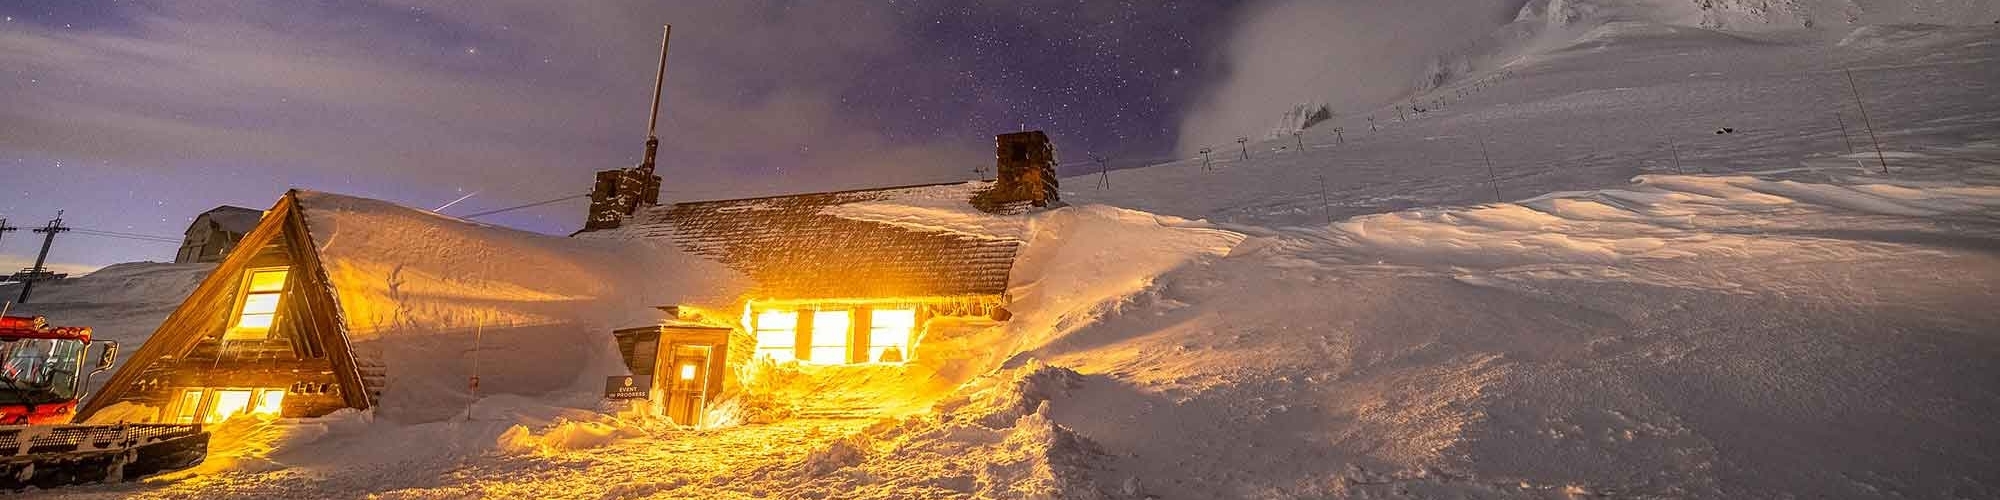 SILCOX HUT AT NIGHT IN THE SNOW